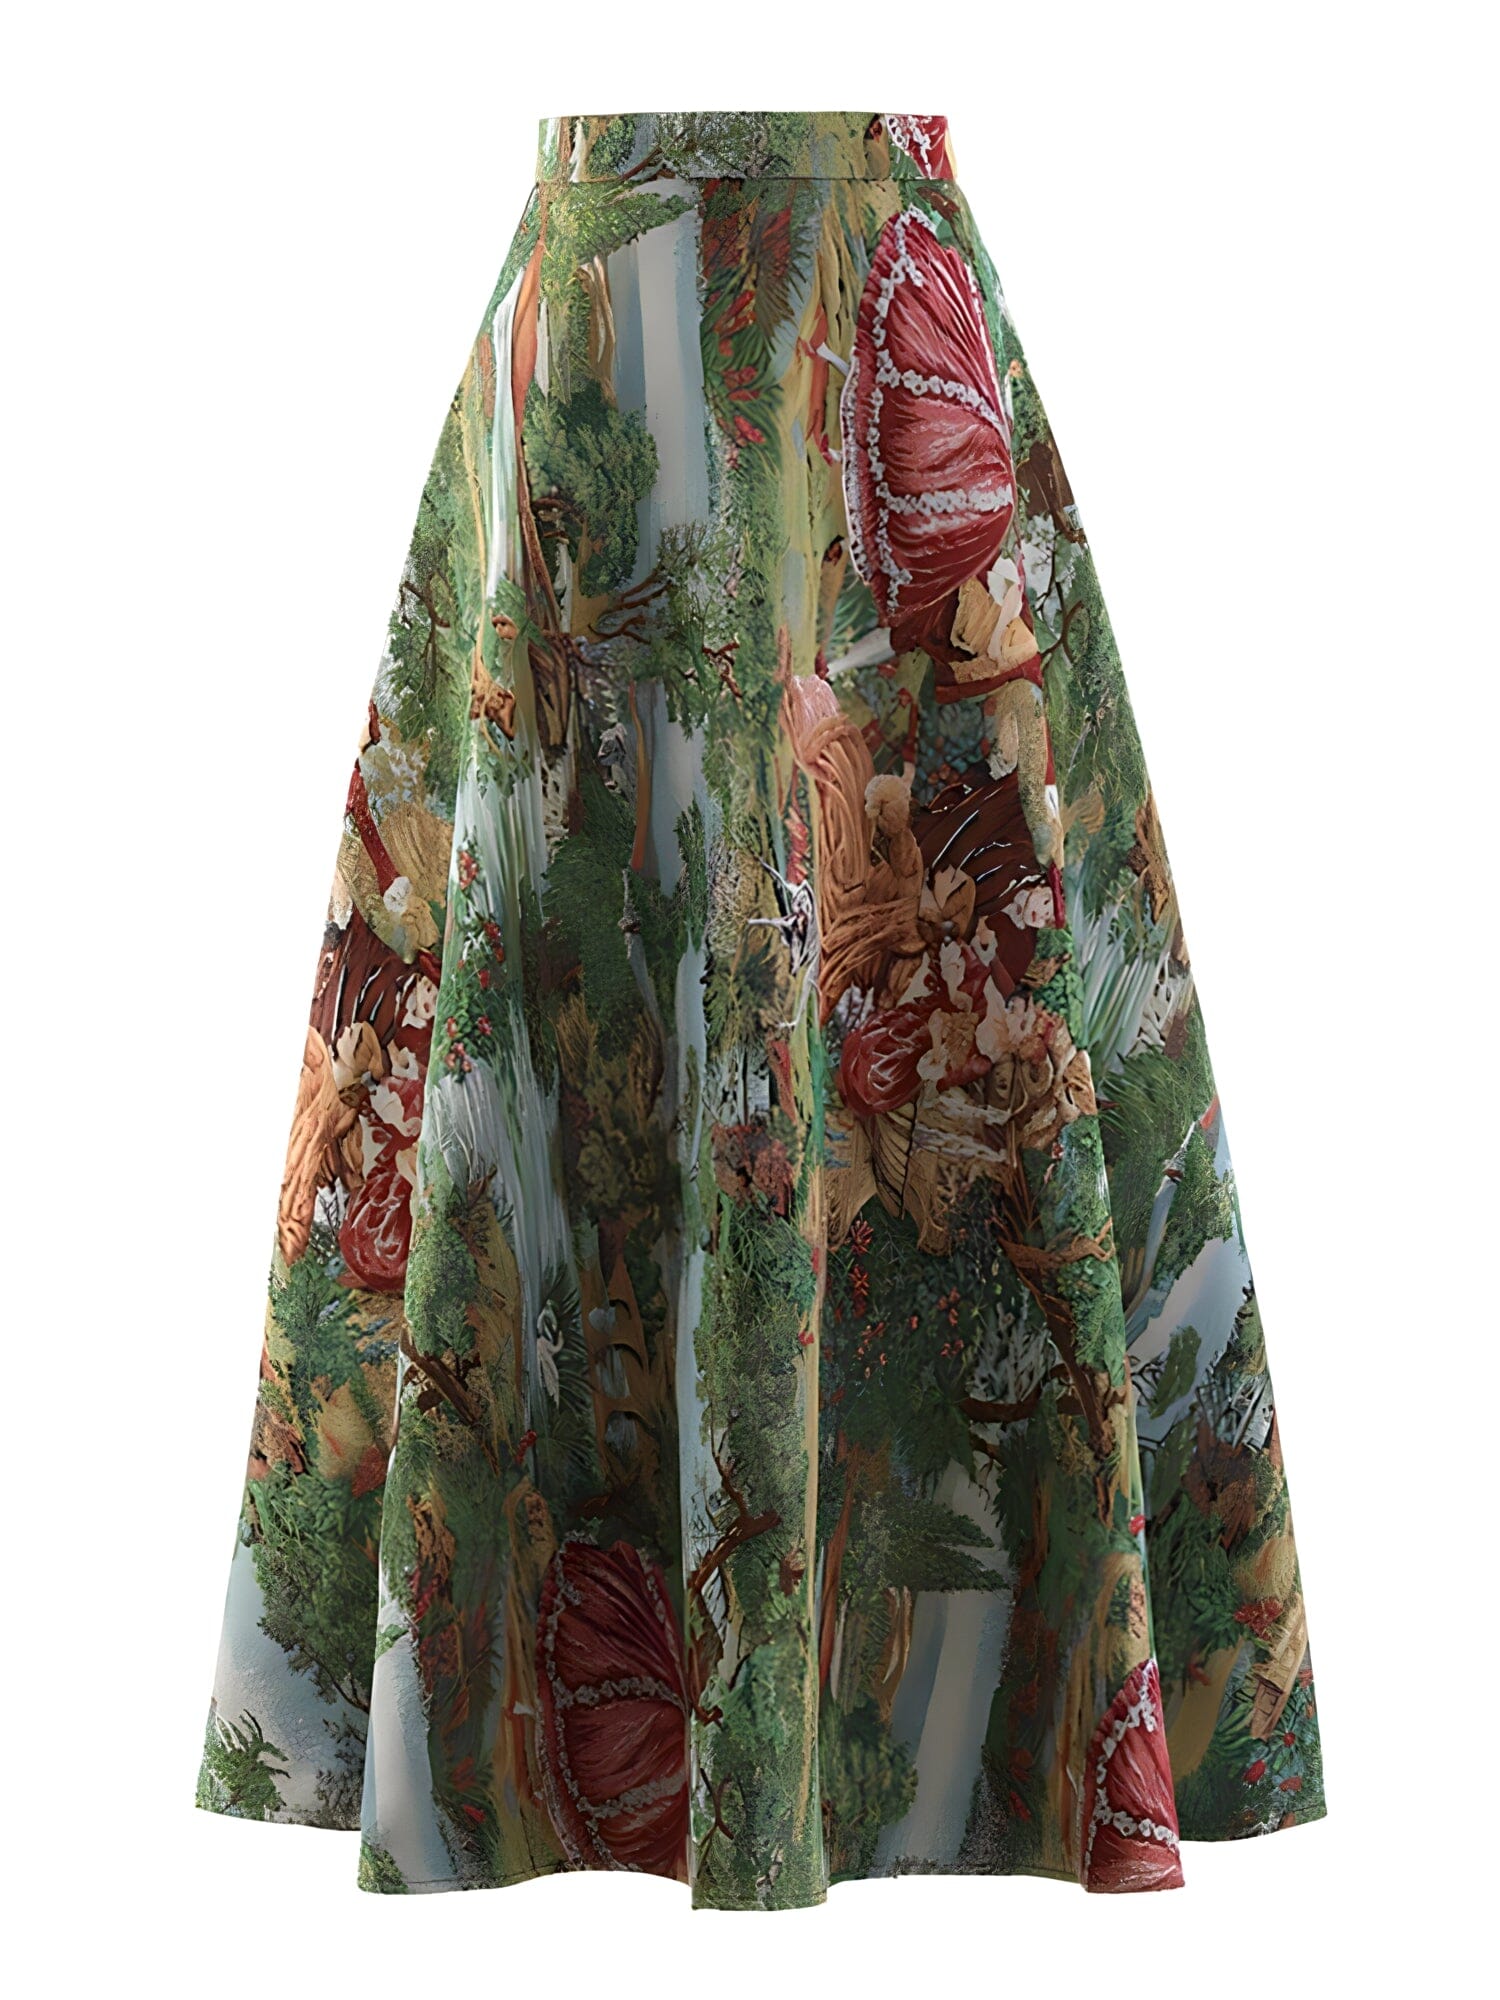 The Fauna High-Waisted Skirt 0 SA Styles S 